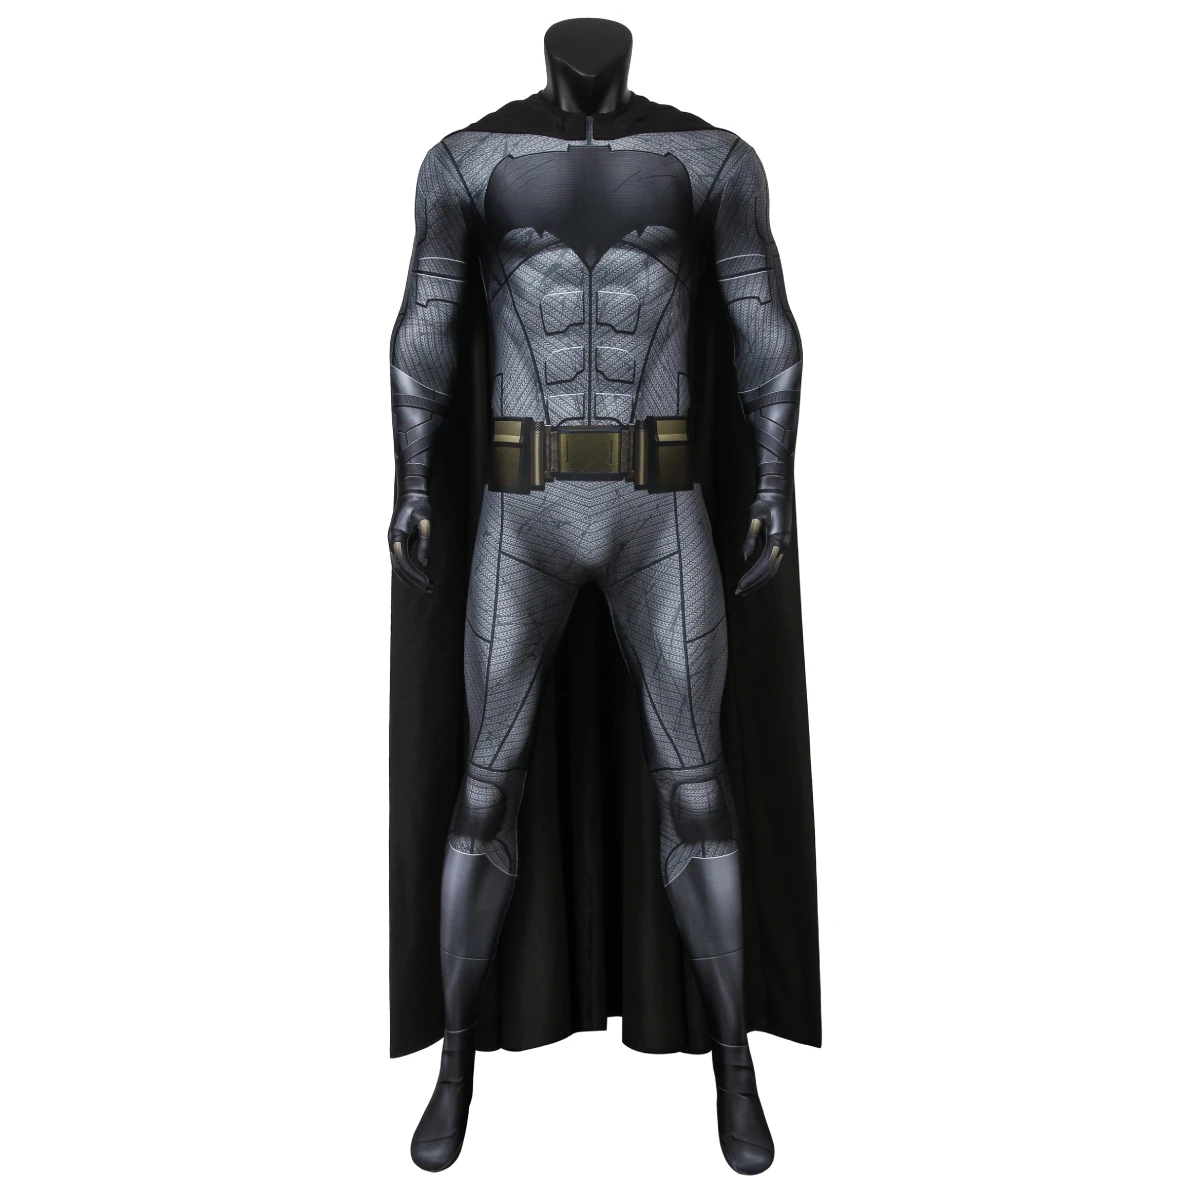 

Justice League Bat man Super Hero Cosplay Costume Adult Cosplay Christmas Halloween Costume Set J19043BA, Photo